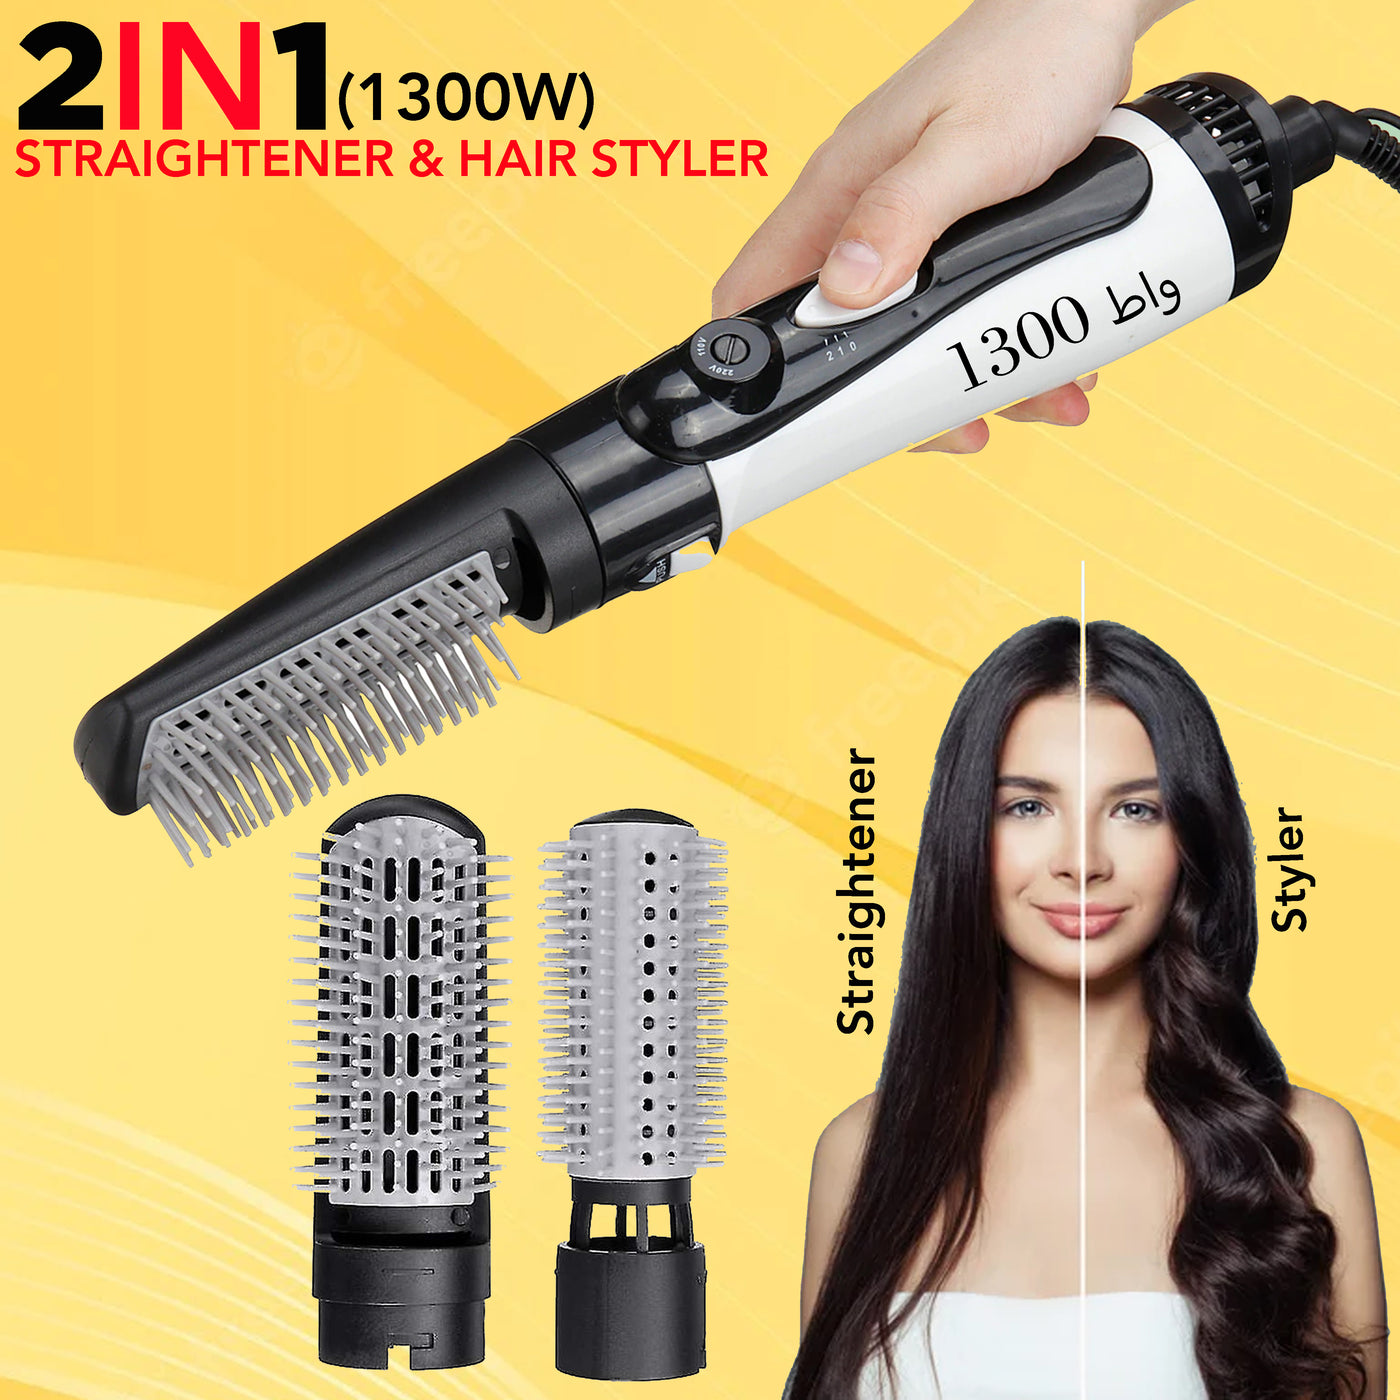 Pamtek Korean Hair Styling Brush